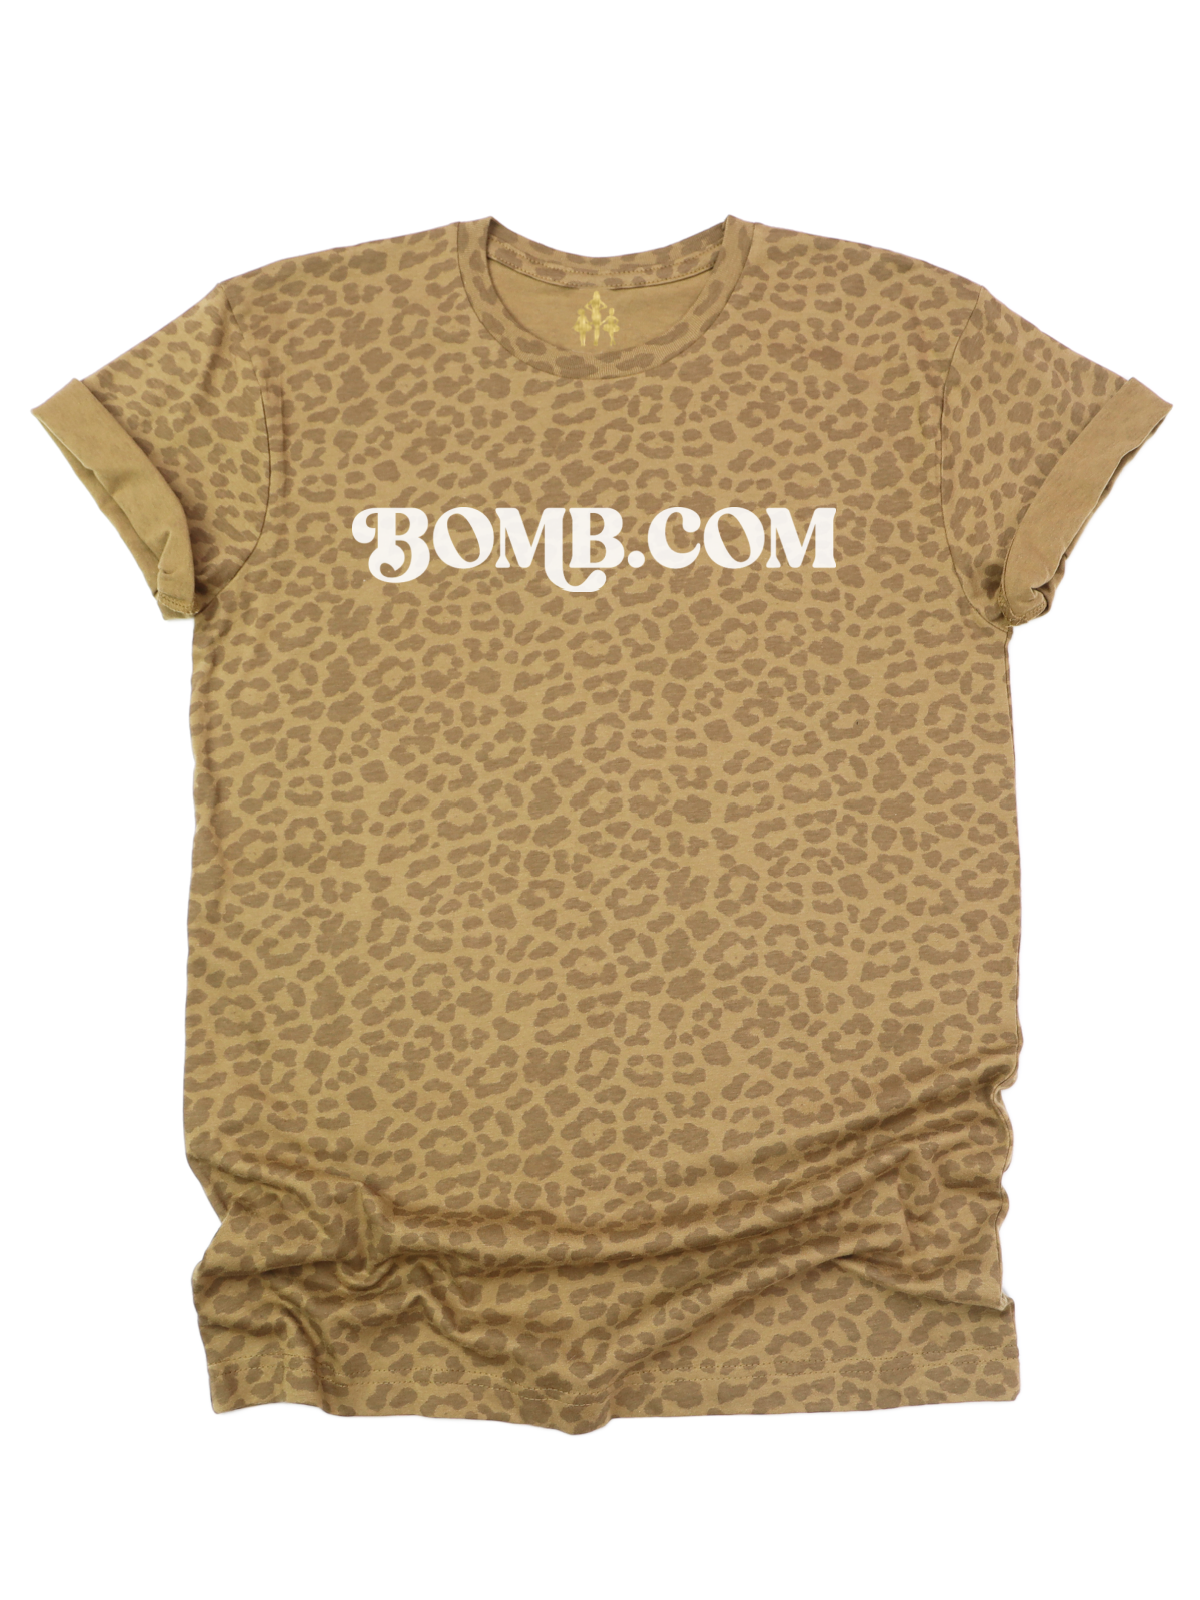 Ladies Bomb Dot Com Leopard Print Shirt